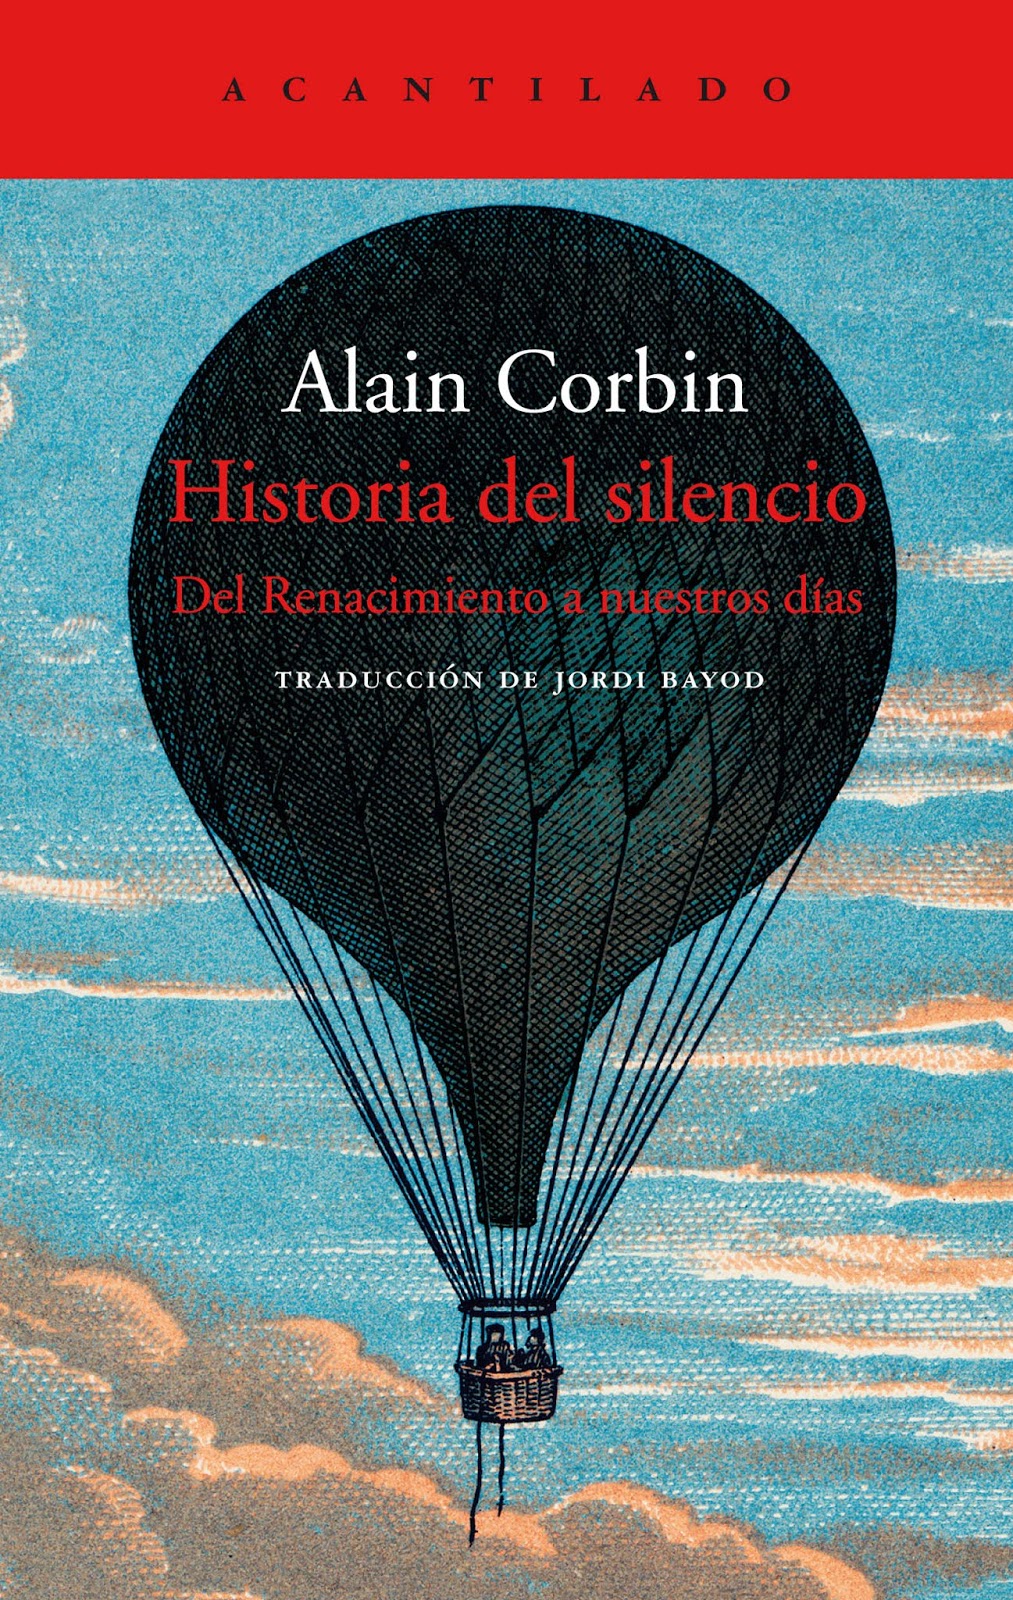 https://laantiguabiblos.blogspot.com/2019/11/historia-del-silencio-alain-corbin.html